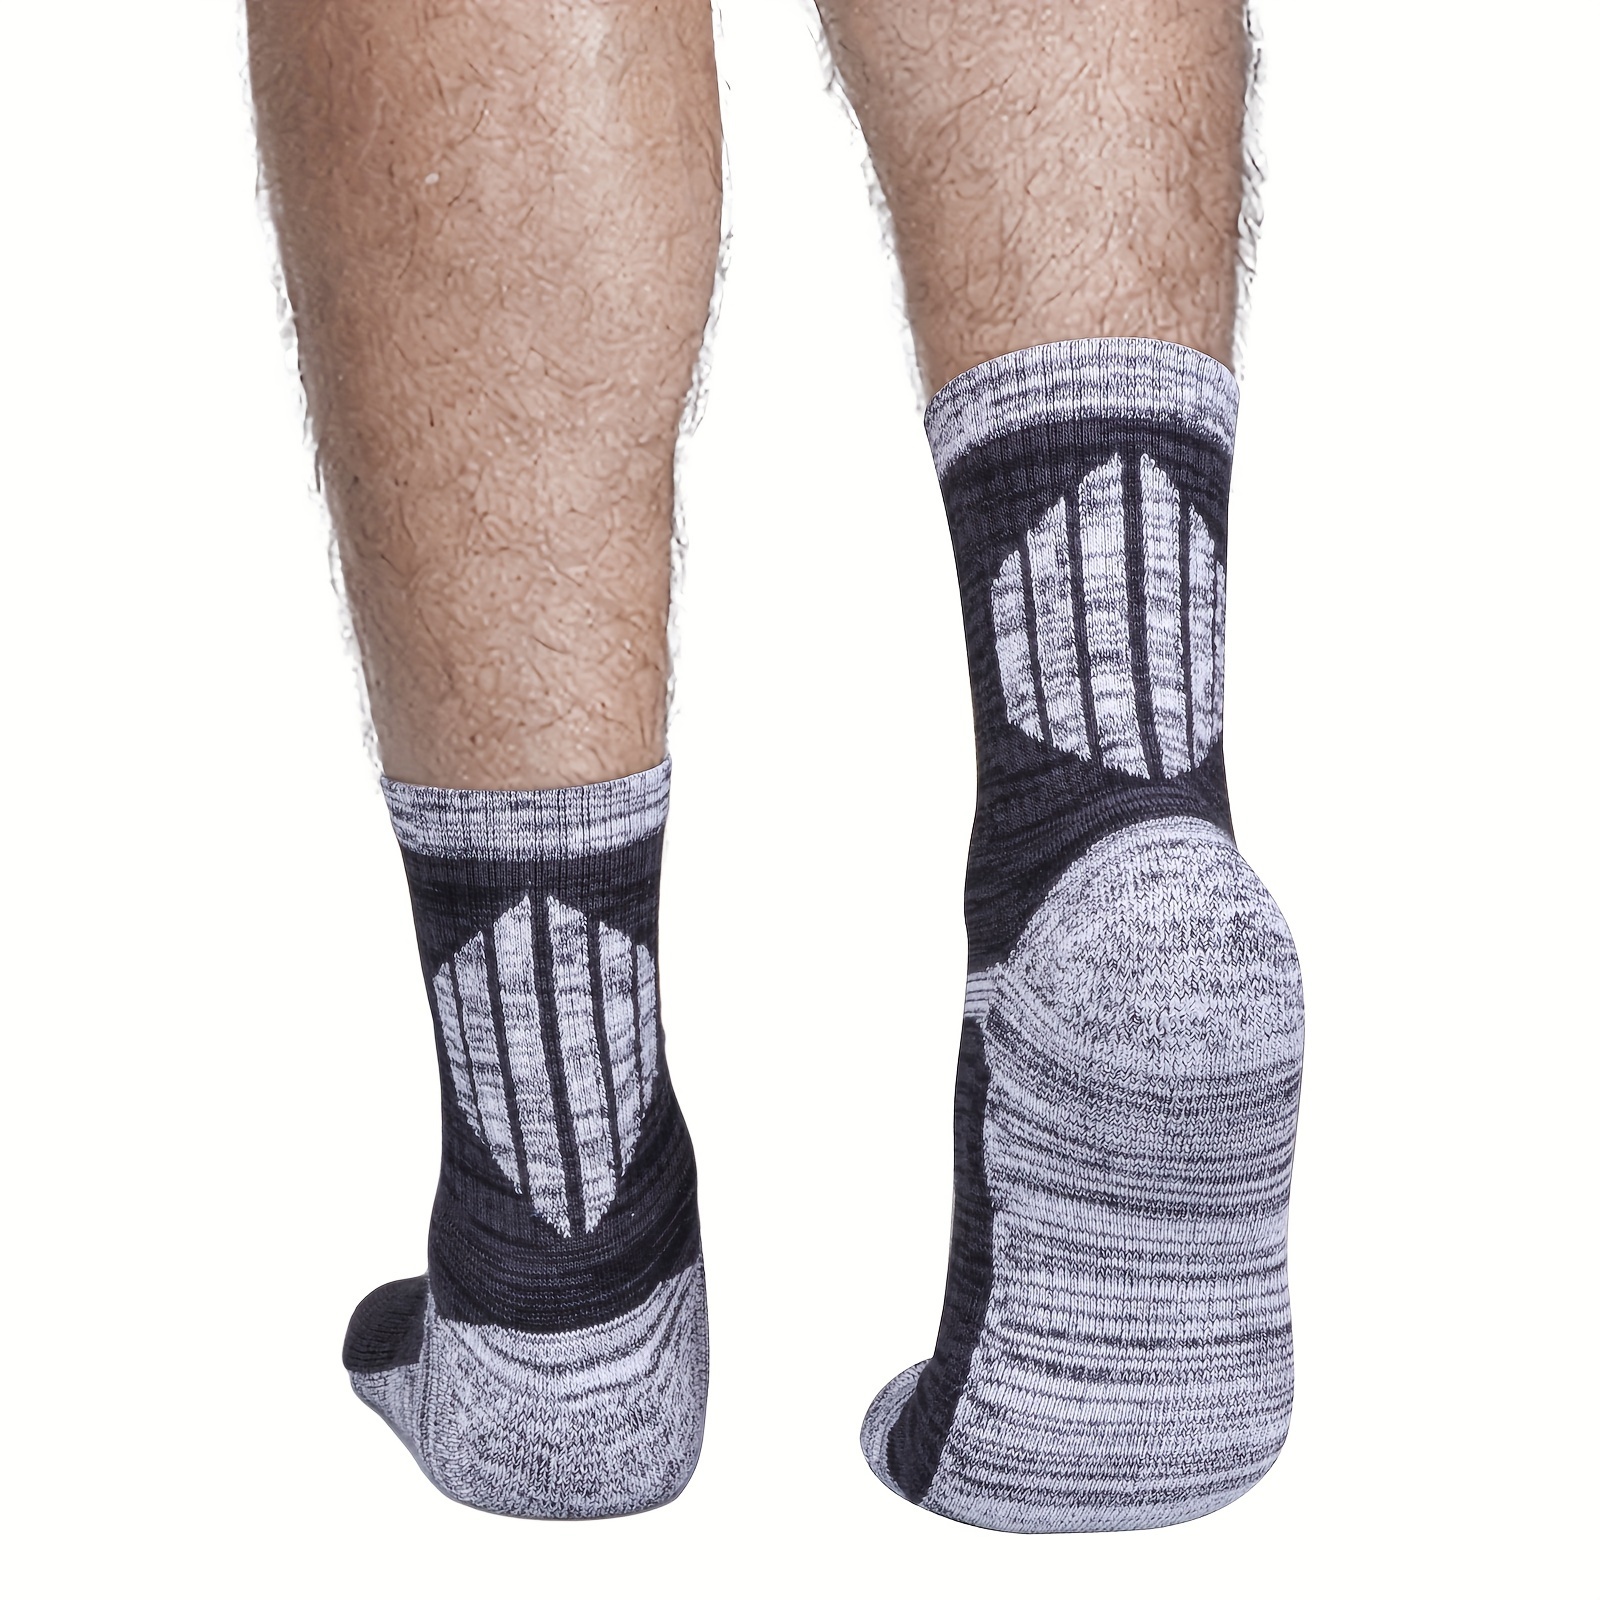 Why you Need Technical Walking Socks